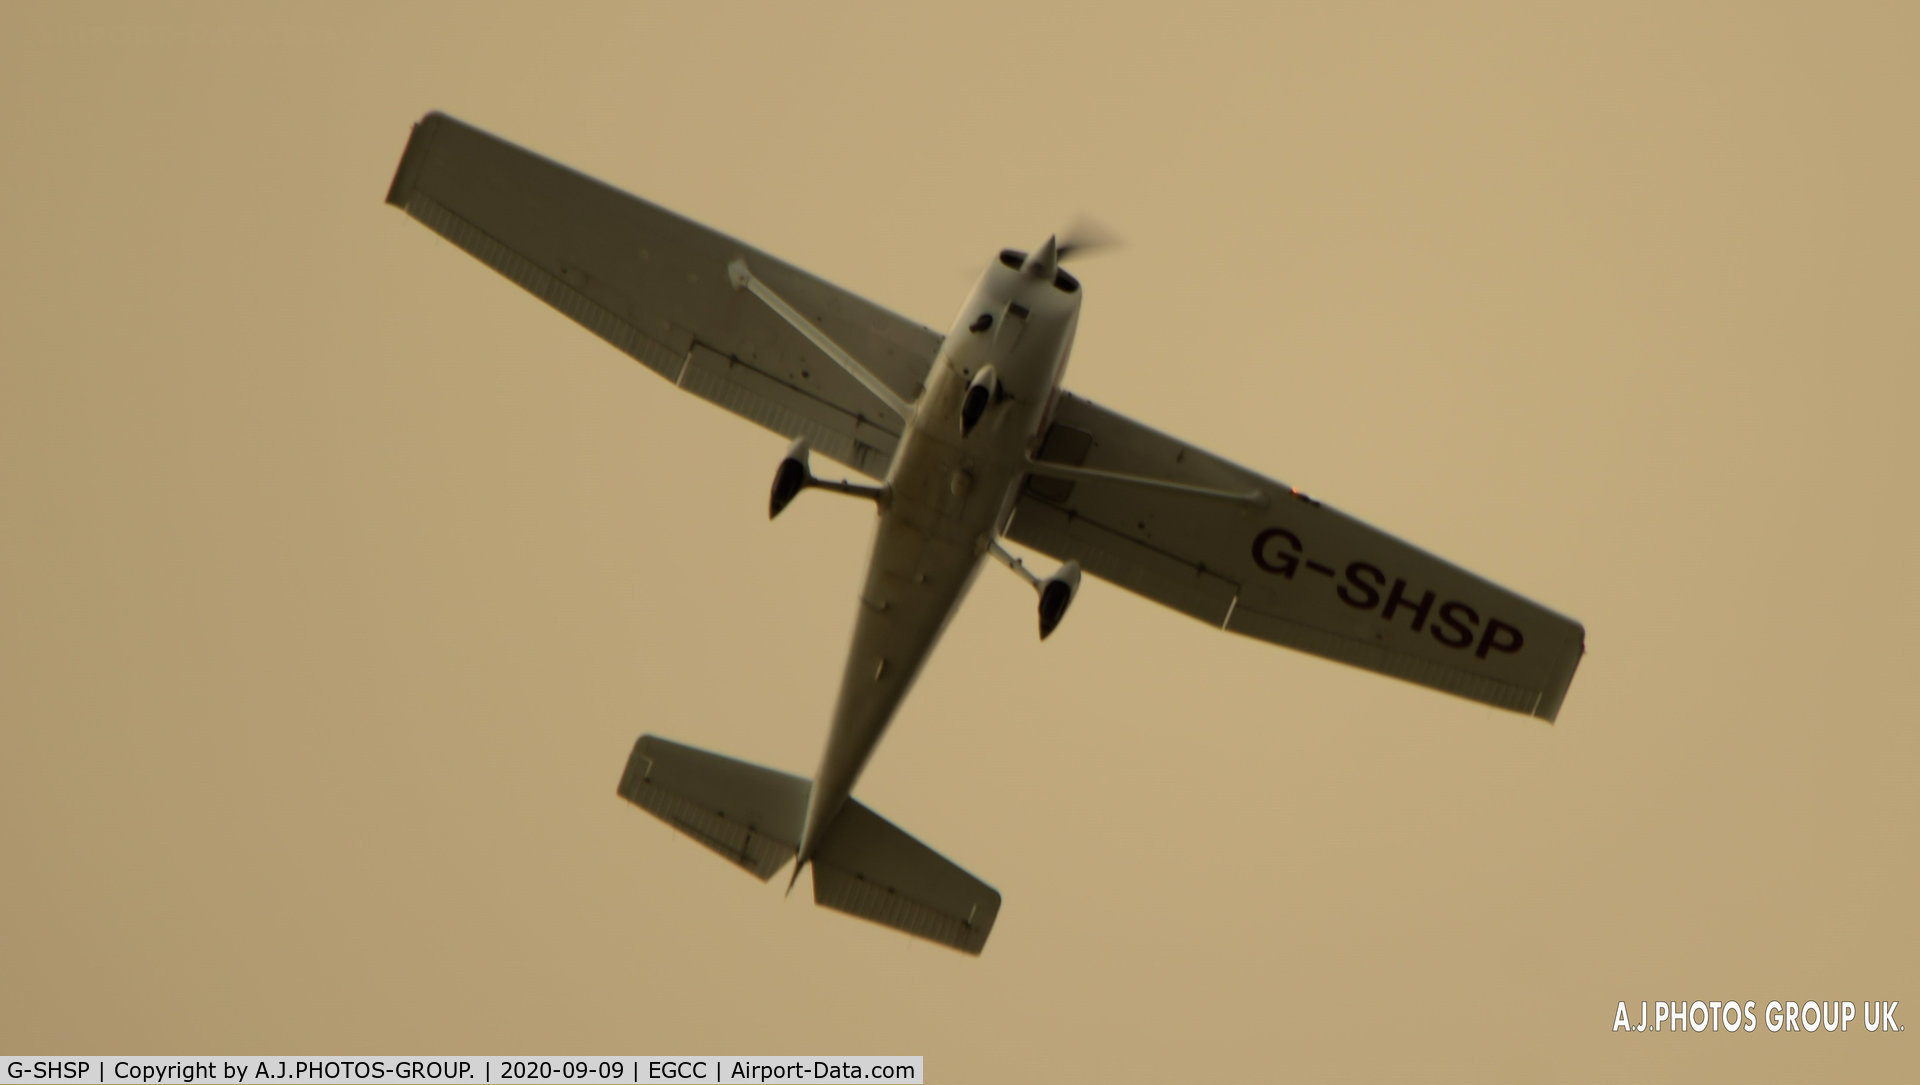 G-SHSP, 1999 Cessna 172S C/N 172S8079, was opp round near man egcc uk on photo work.